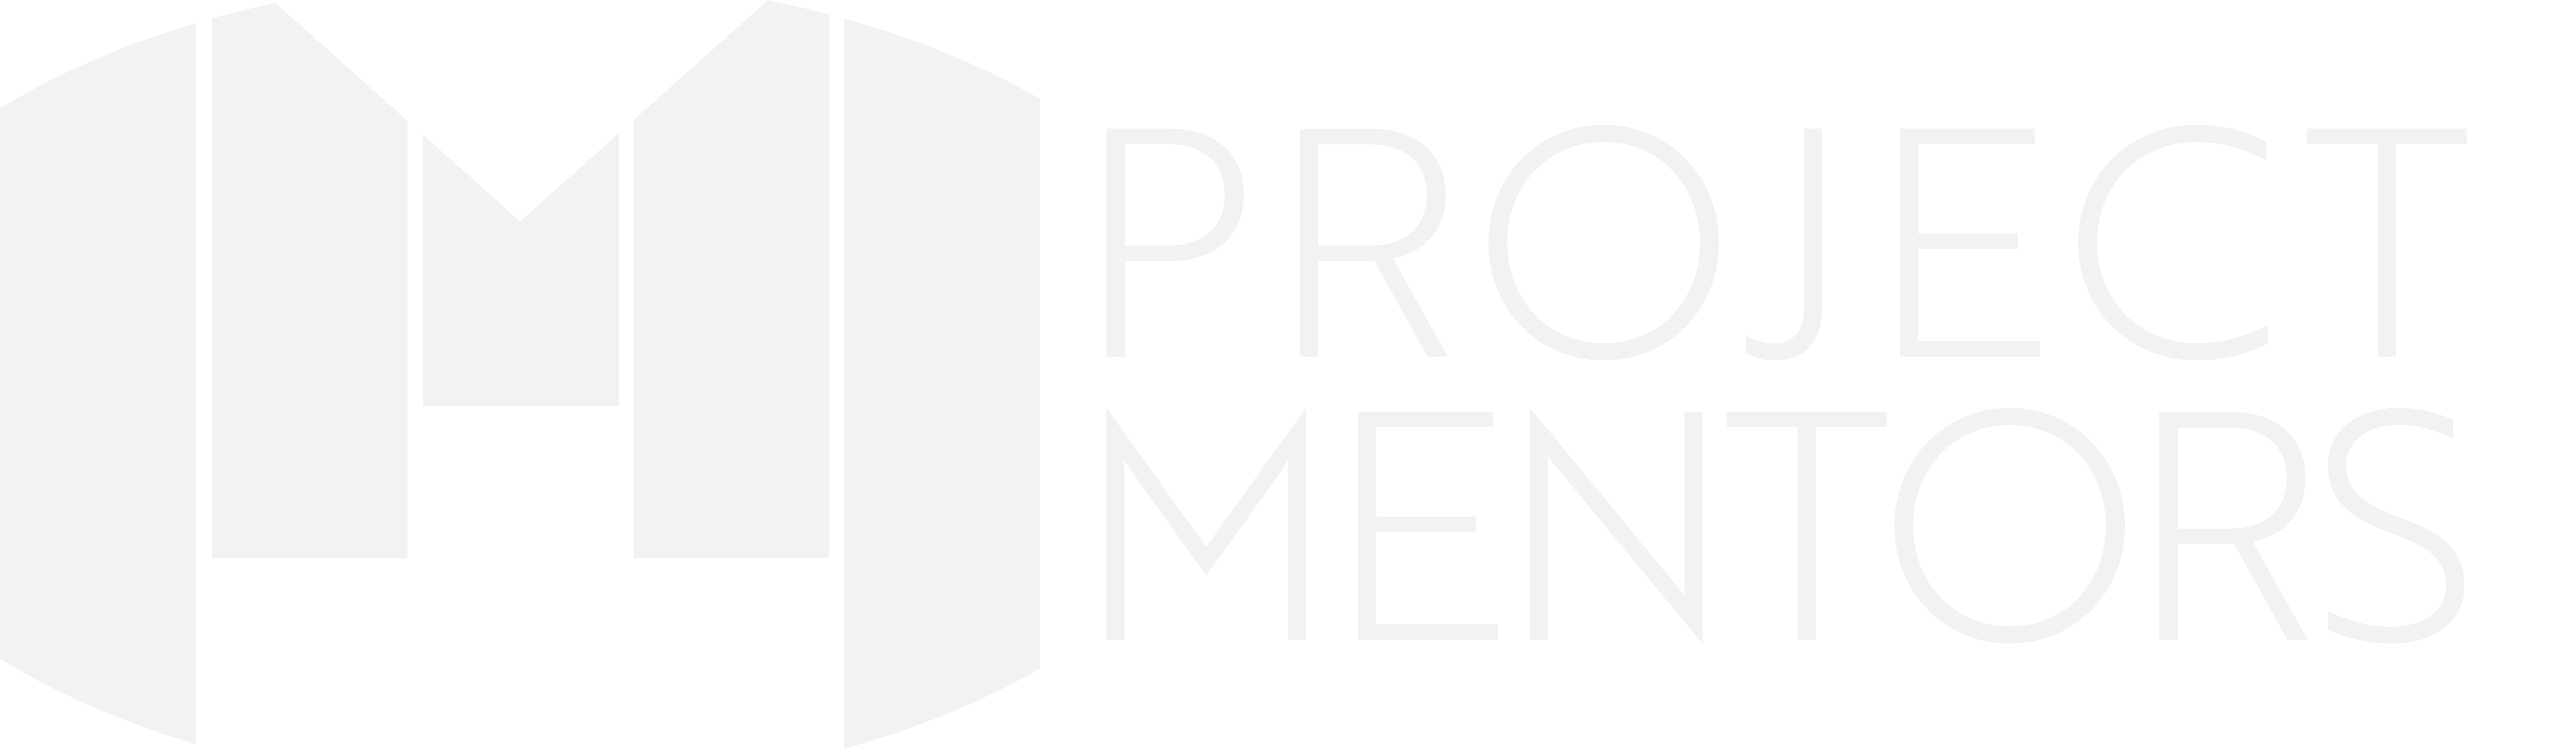 Project Mentors Logo White